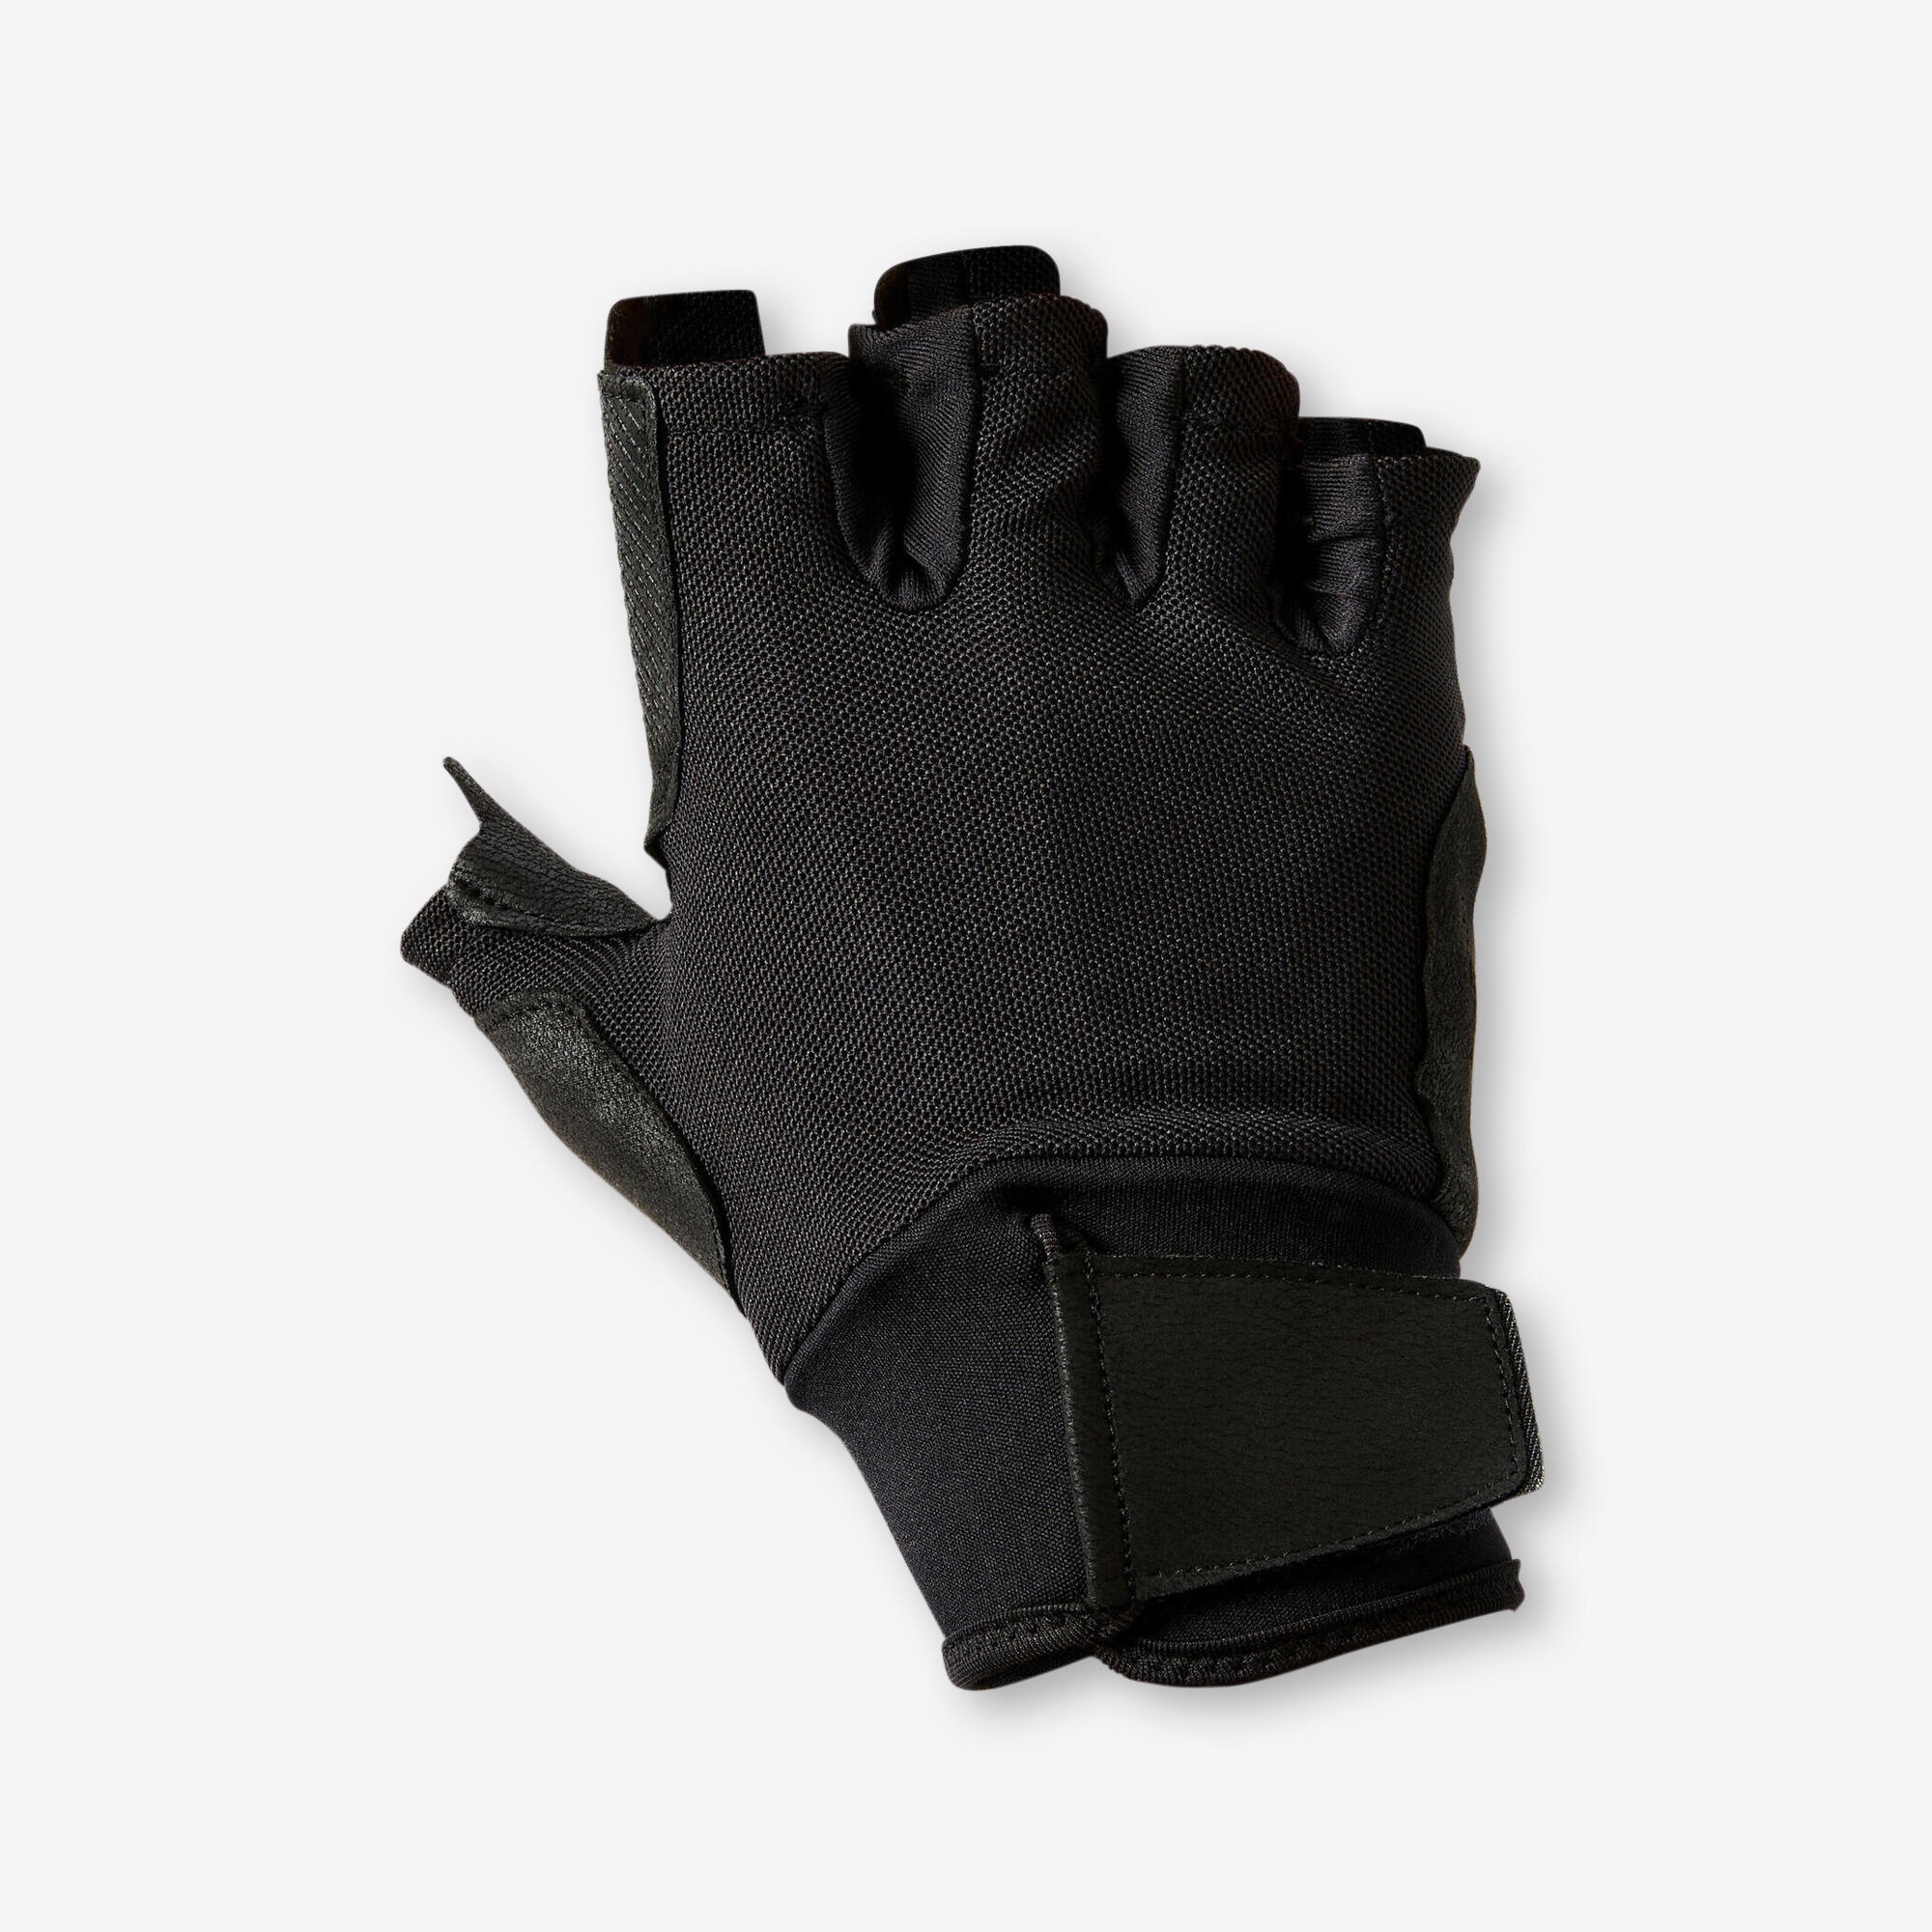 gants musculation confort - noir - domyos